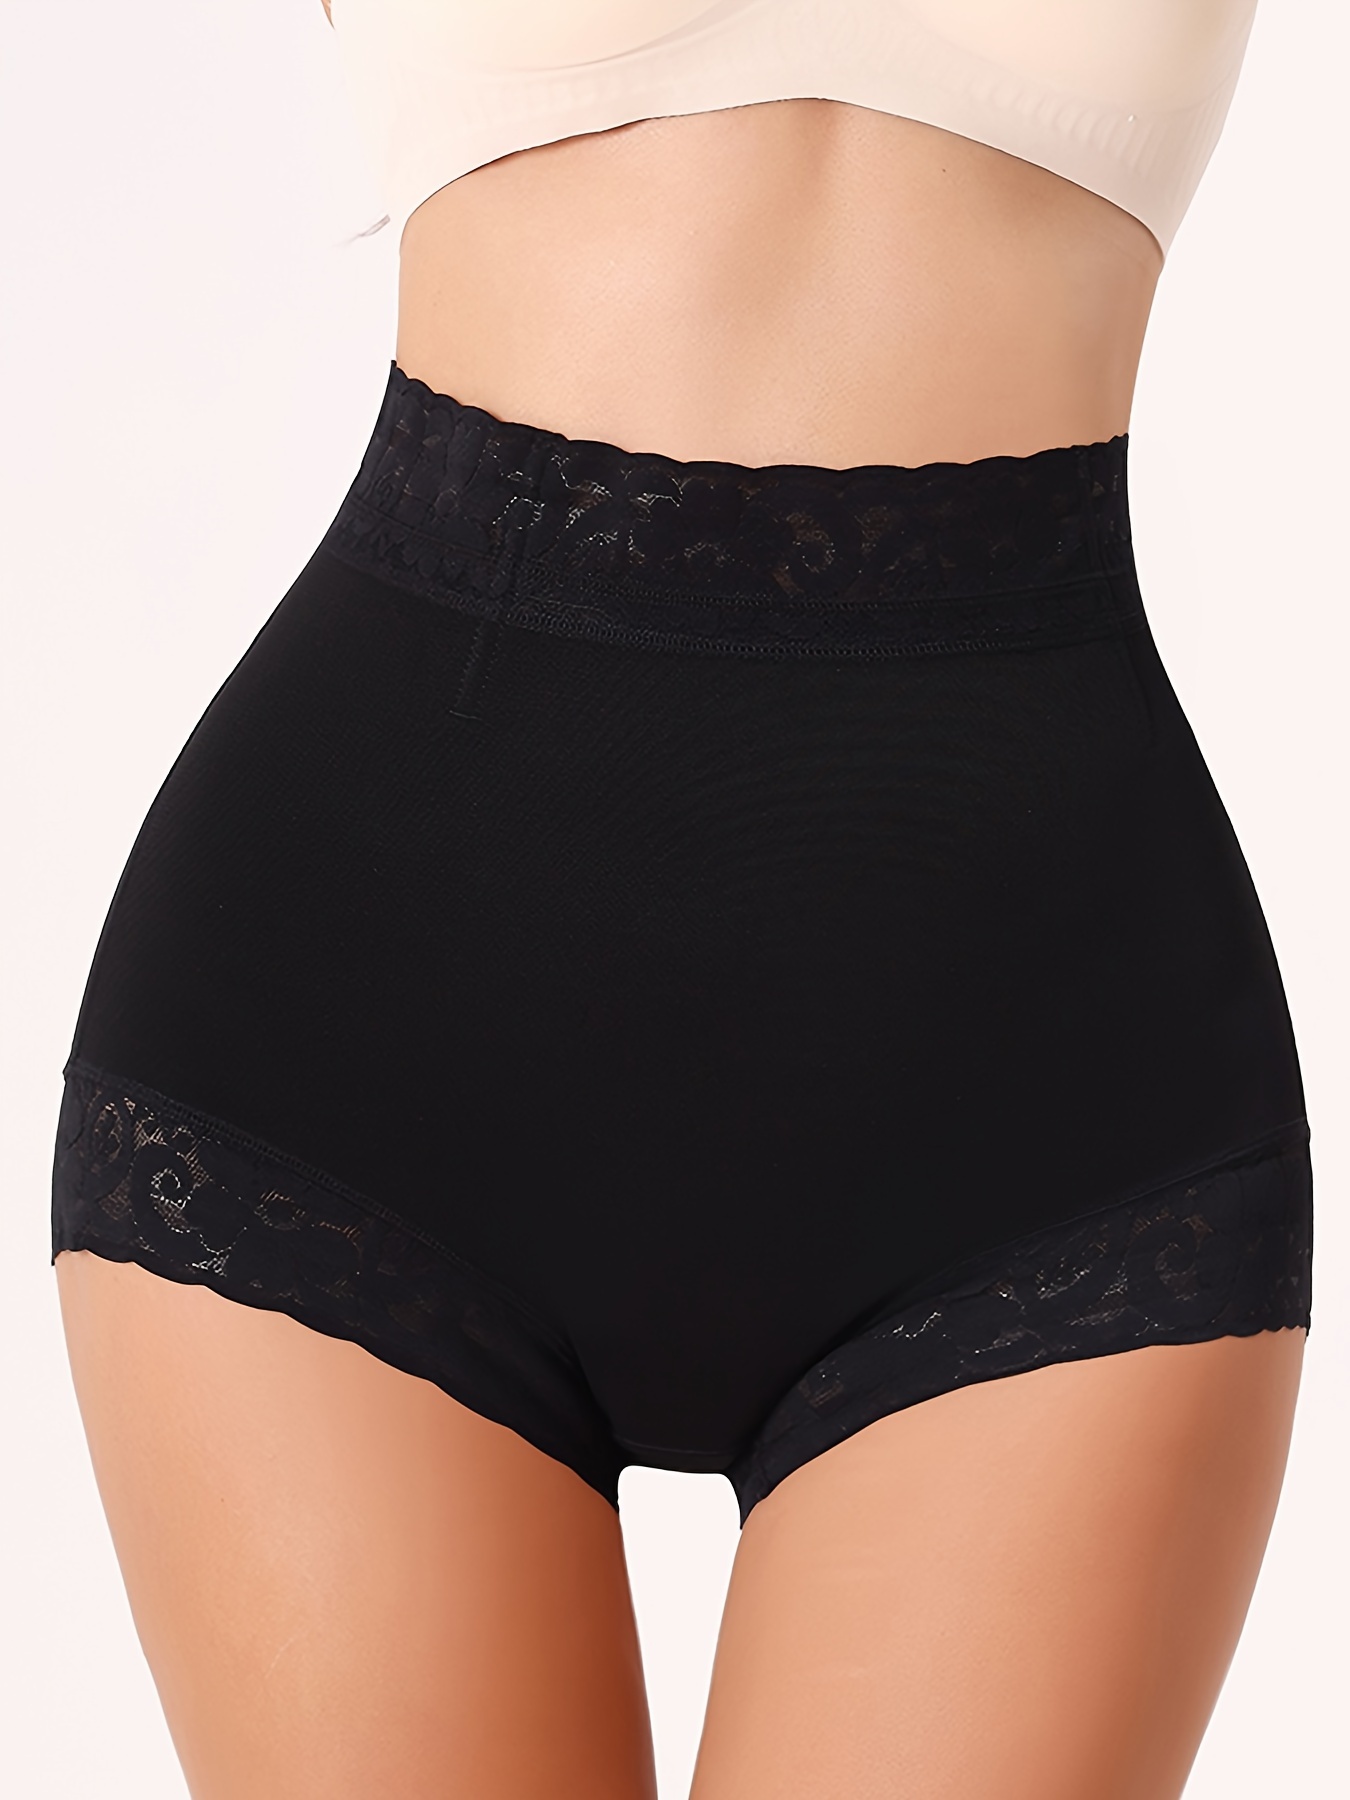 Undergarments for Women Plus Size Control Underwear Naughty